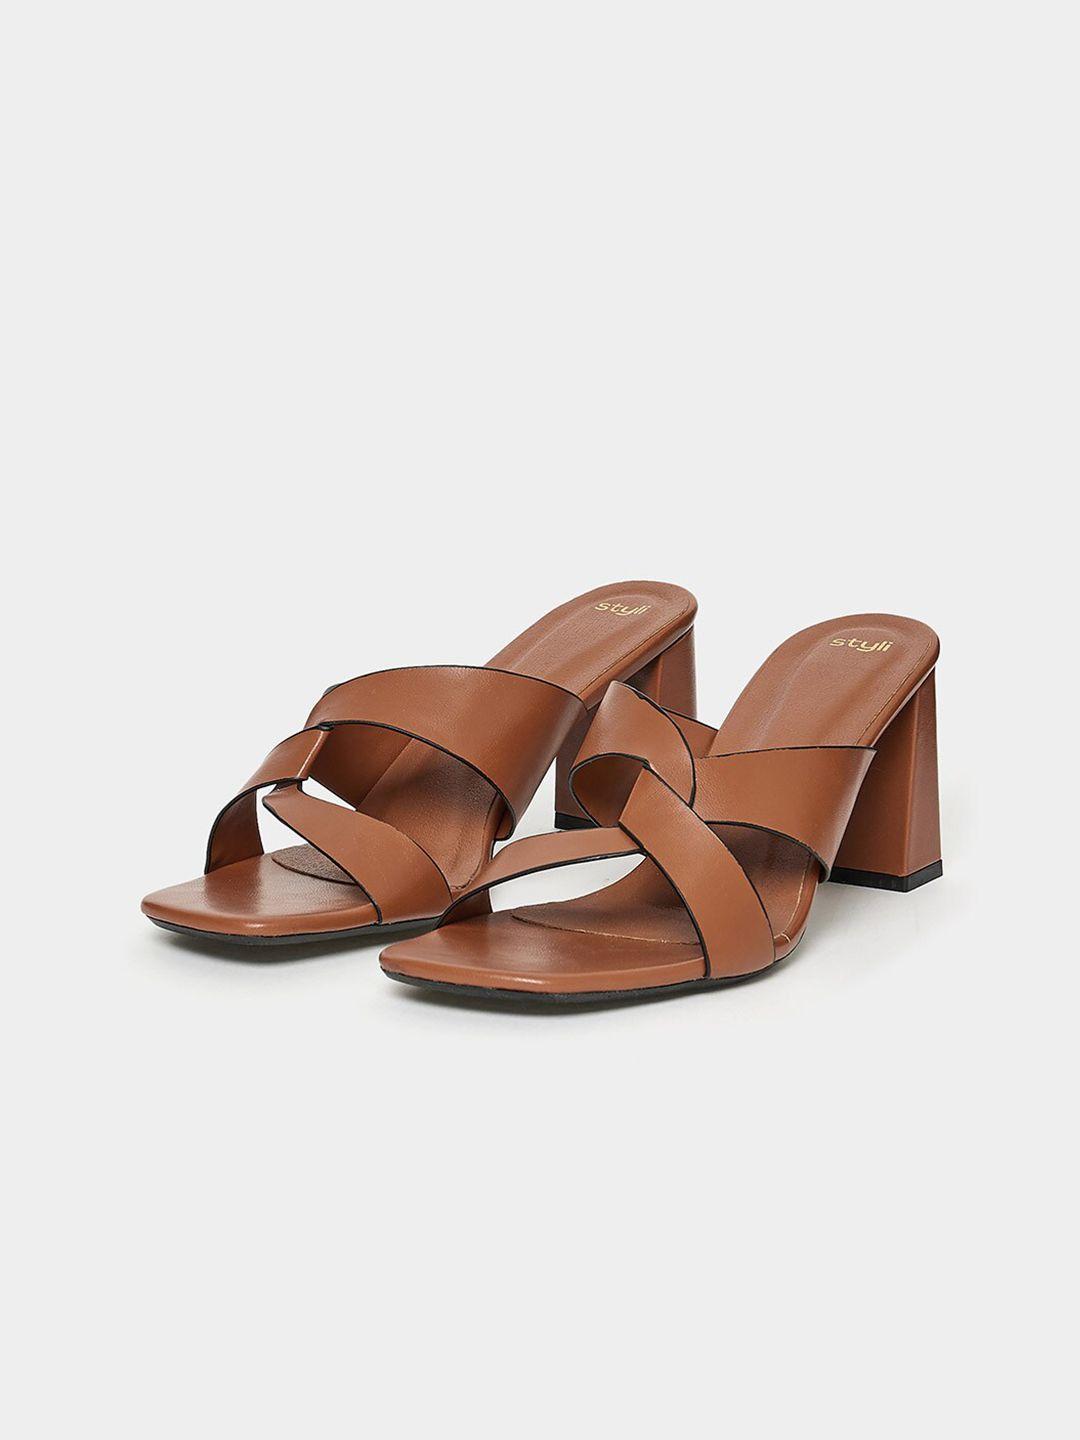 styli-tan-brown-twisted-strap-block-heels